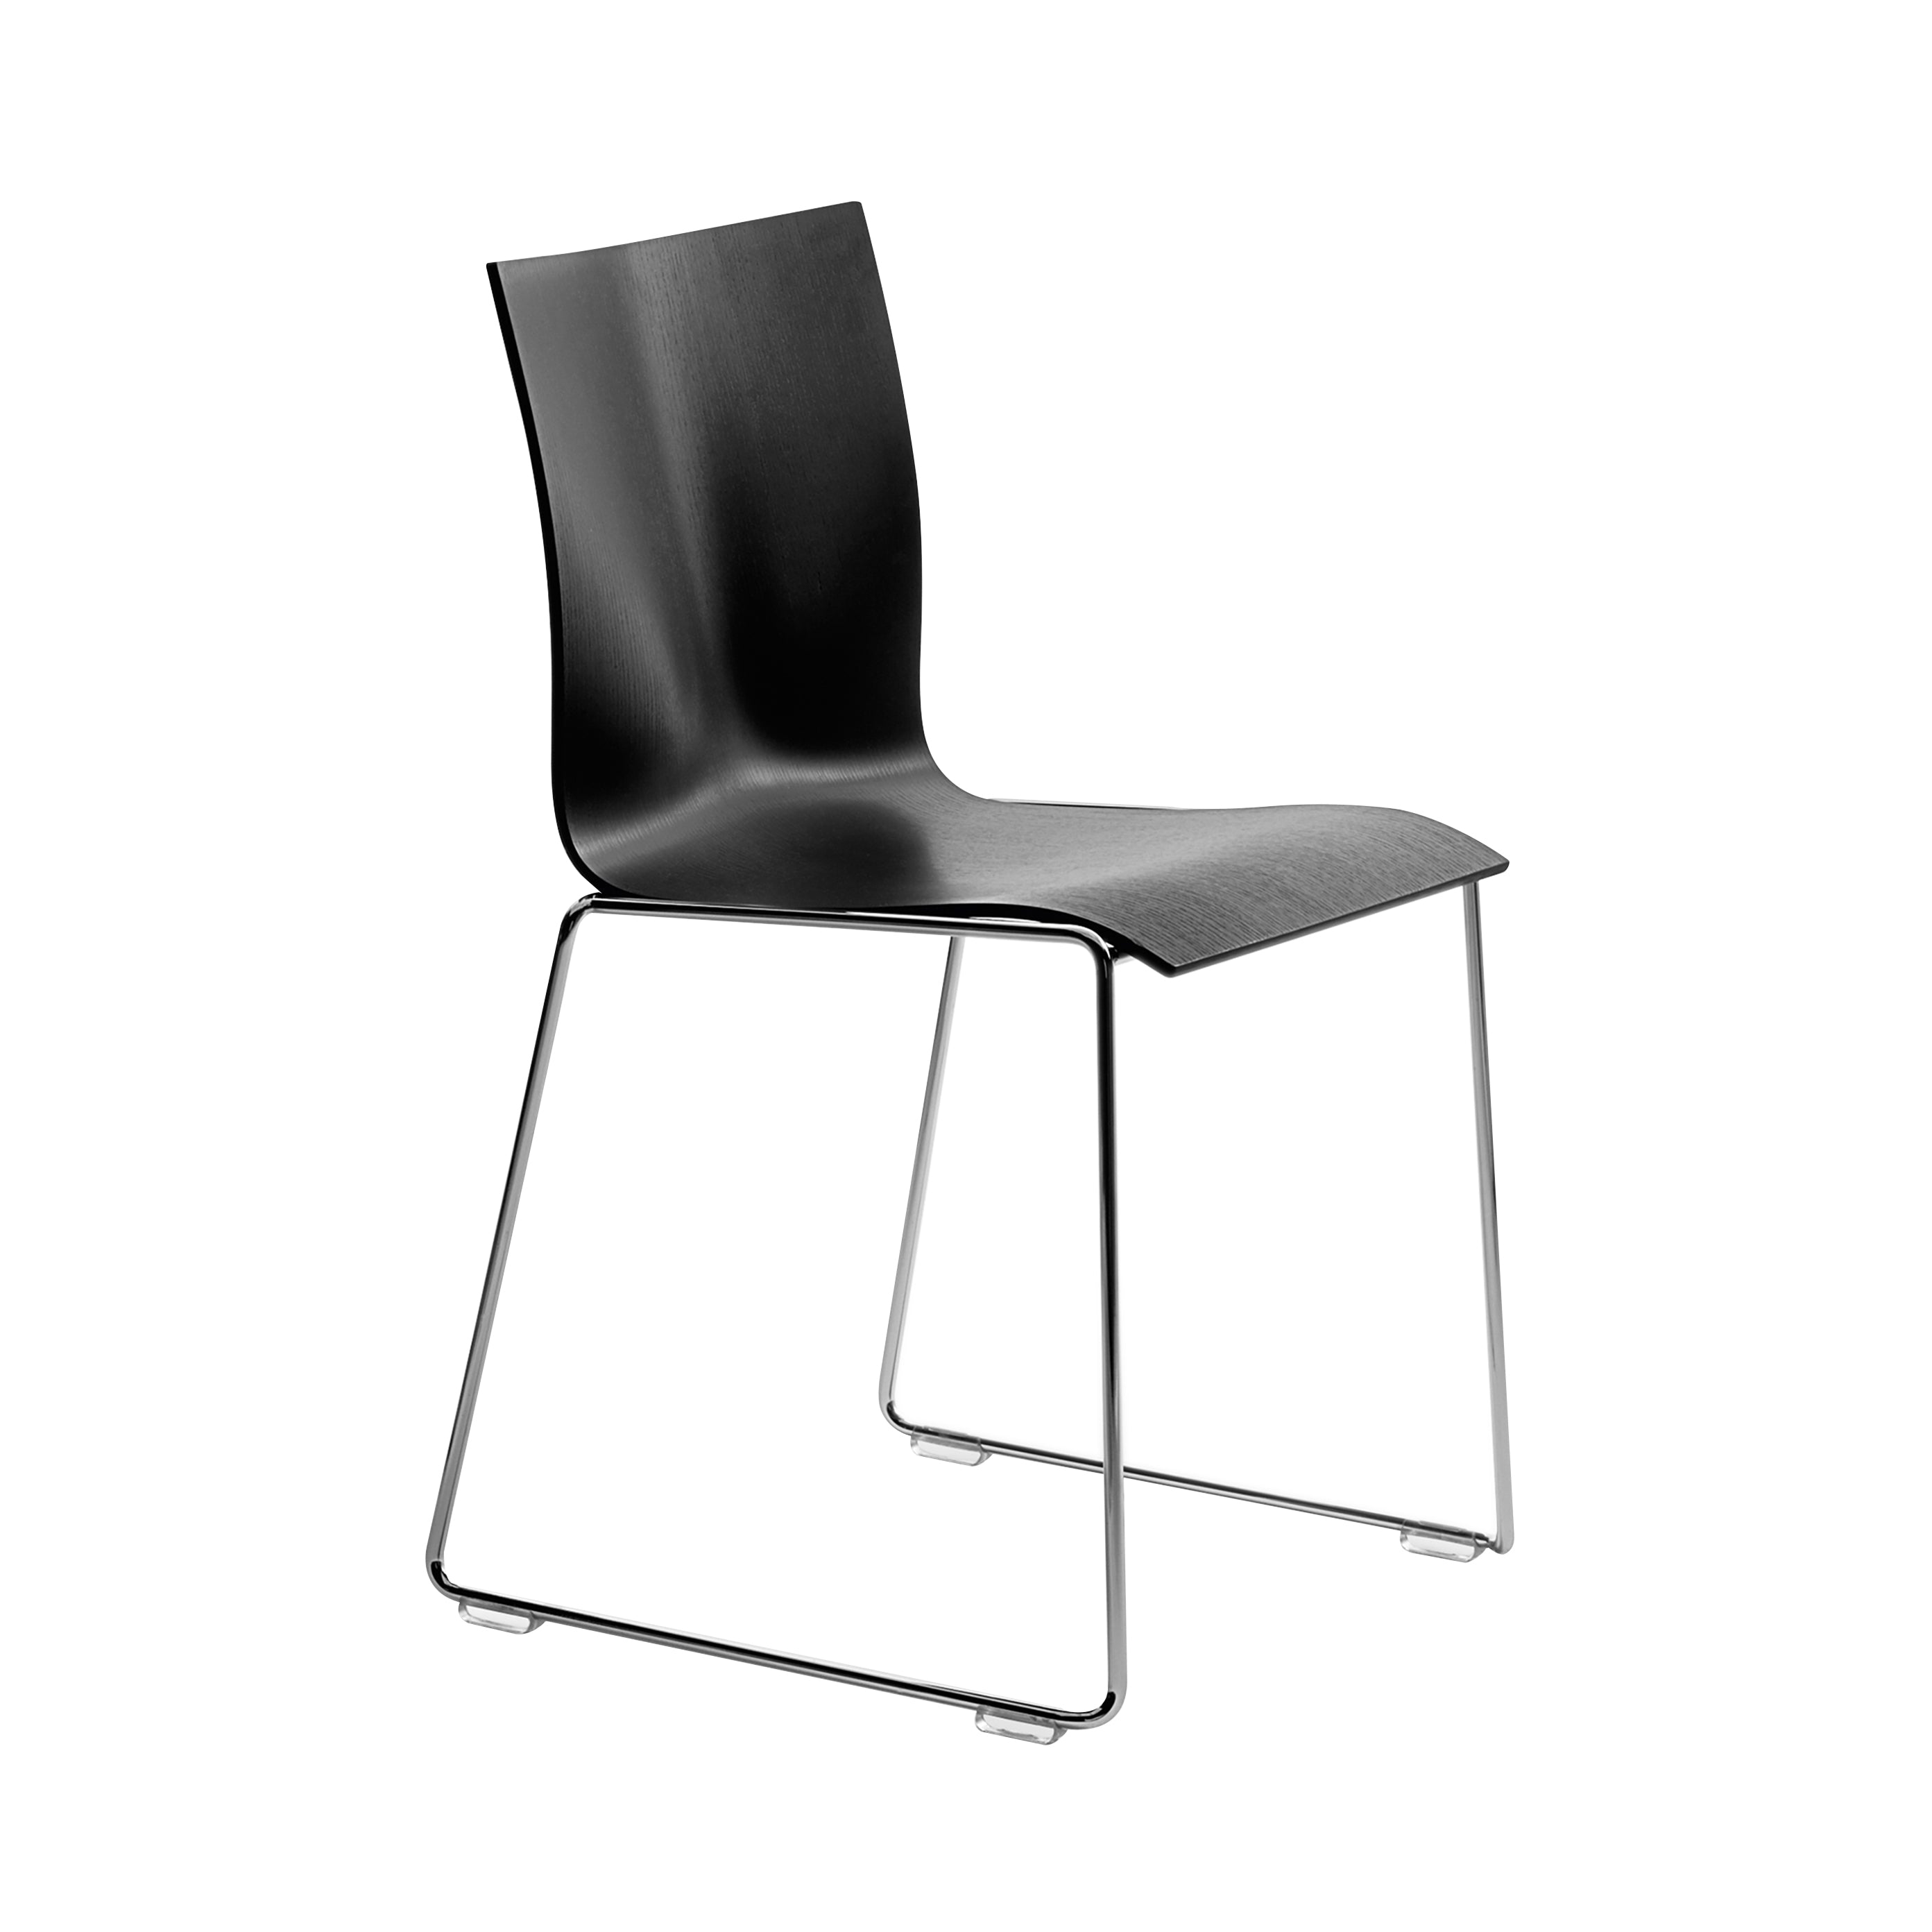 Chairik 107 Chair: Sled Base + Plastic + Black + Polished Chrome